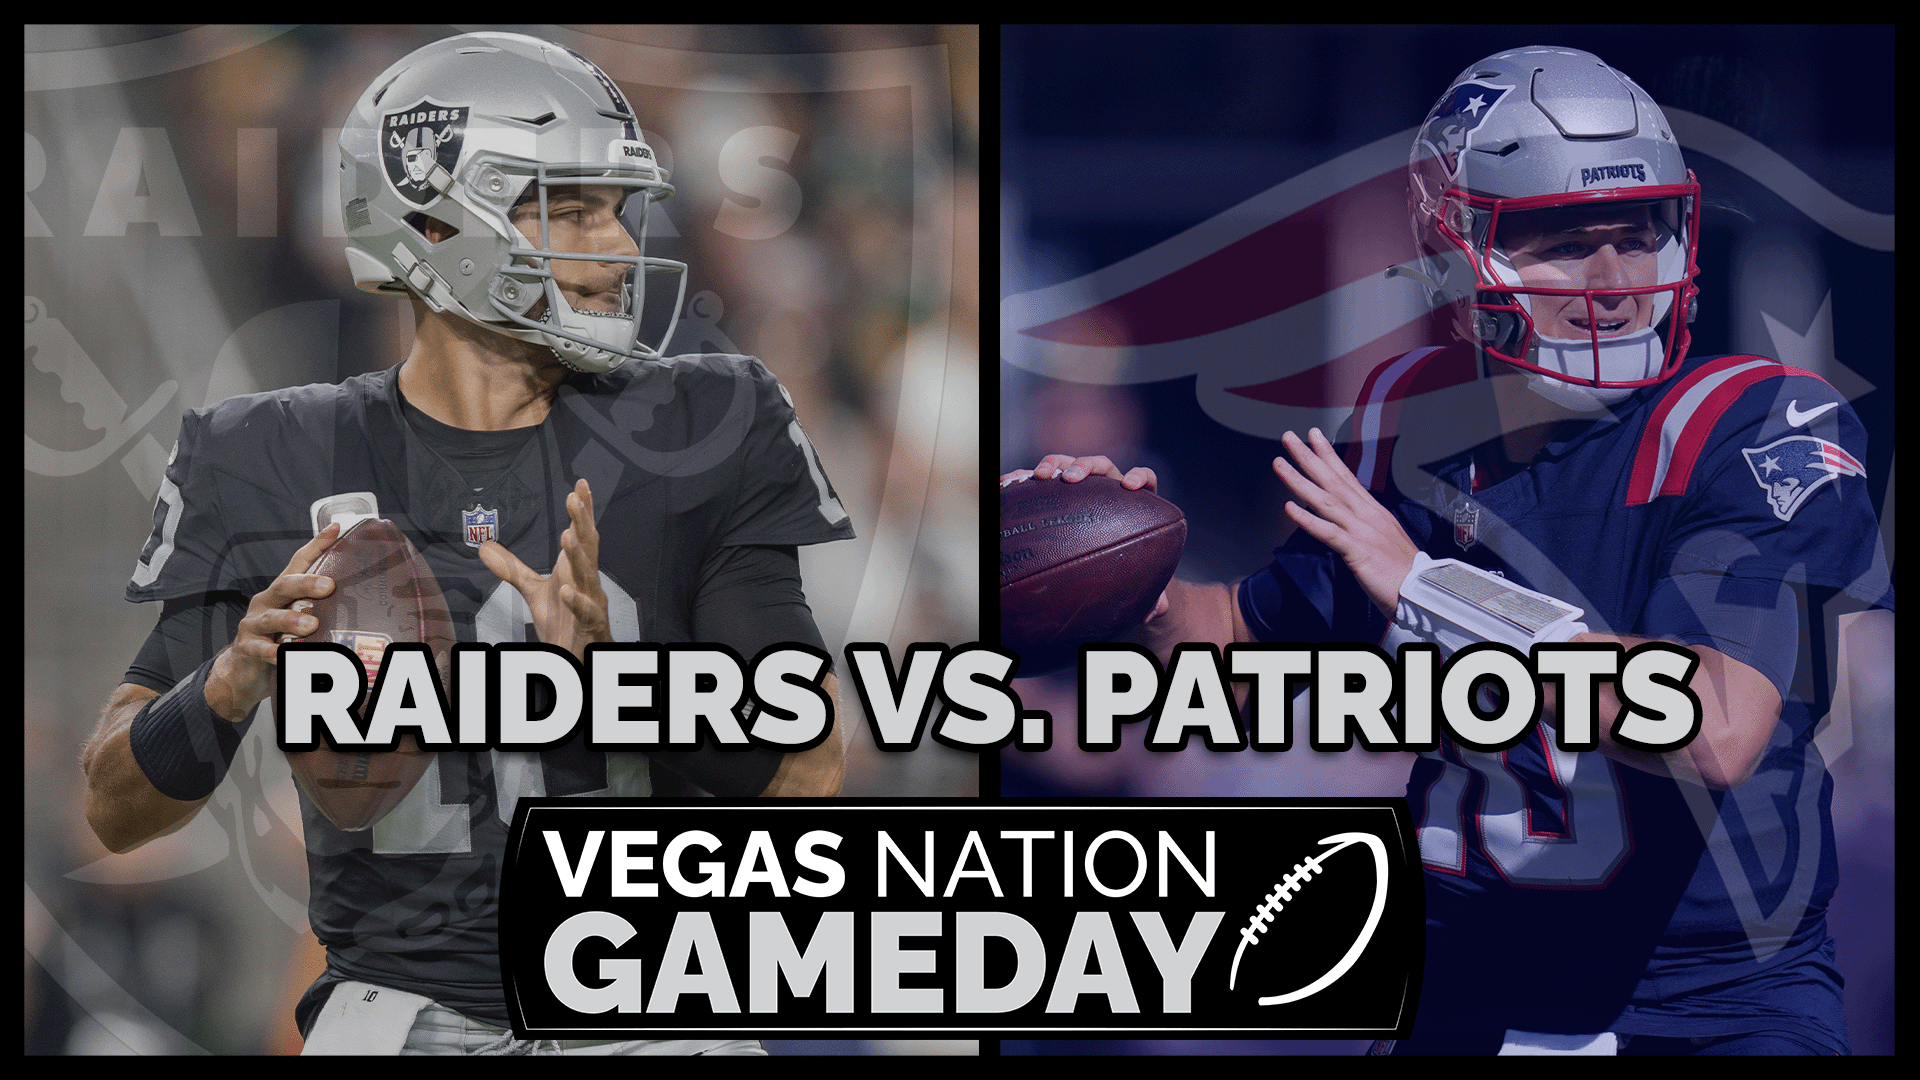 Las Vegas Raiders take on the Patriots after short week